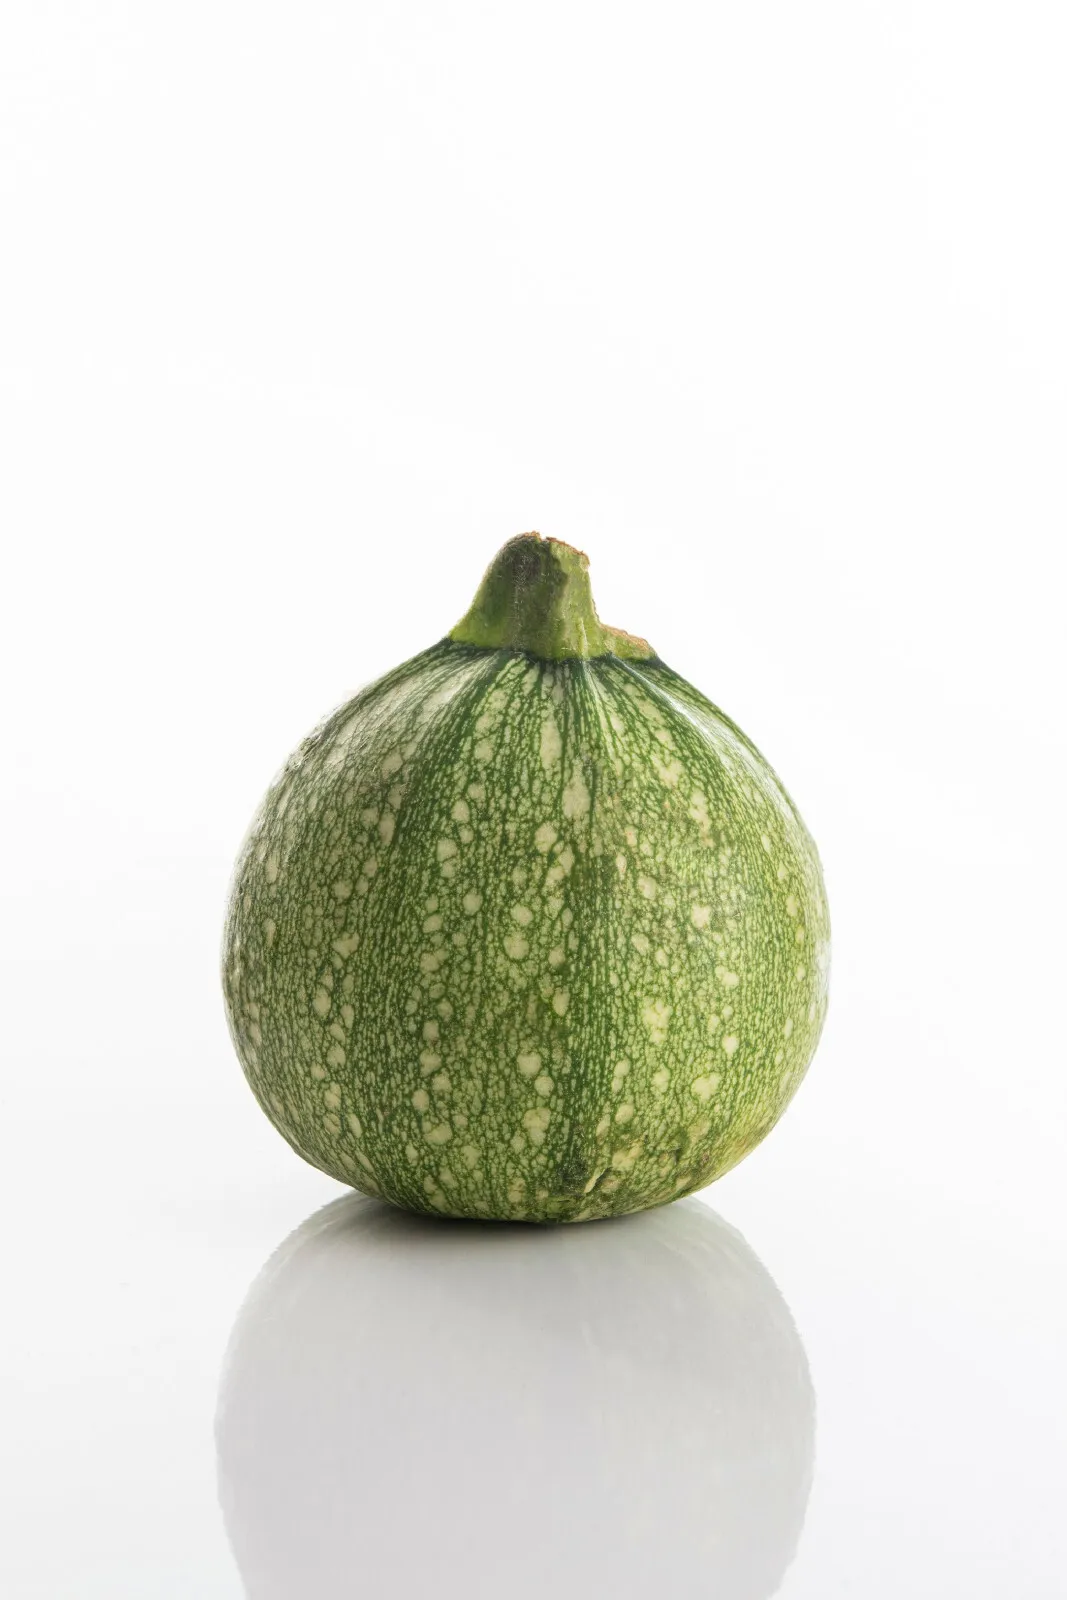 50 Round Zucchini Summer Squash Seeds Non GMO Heirloom Vegetable USA Seller - $8.78